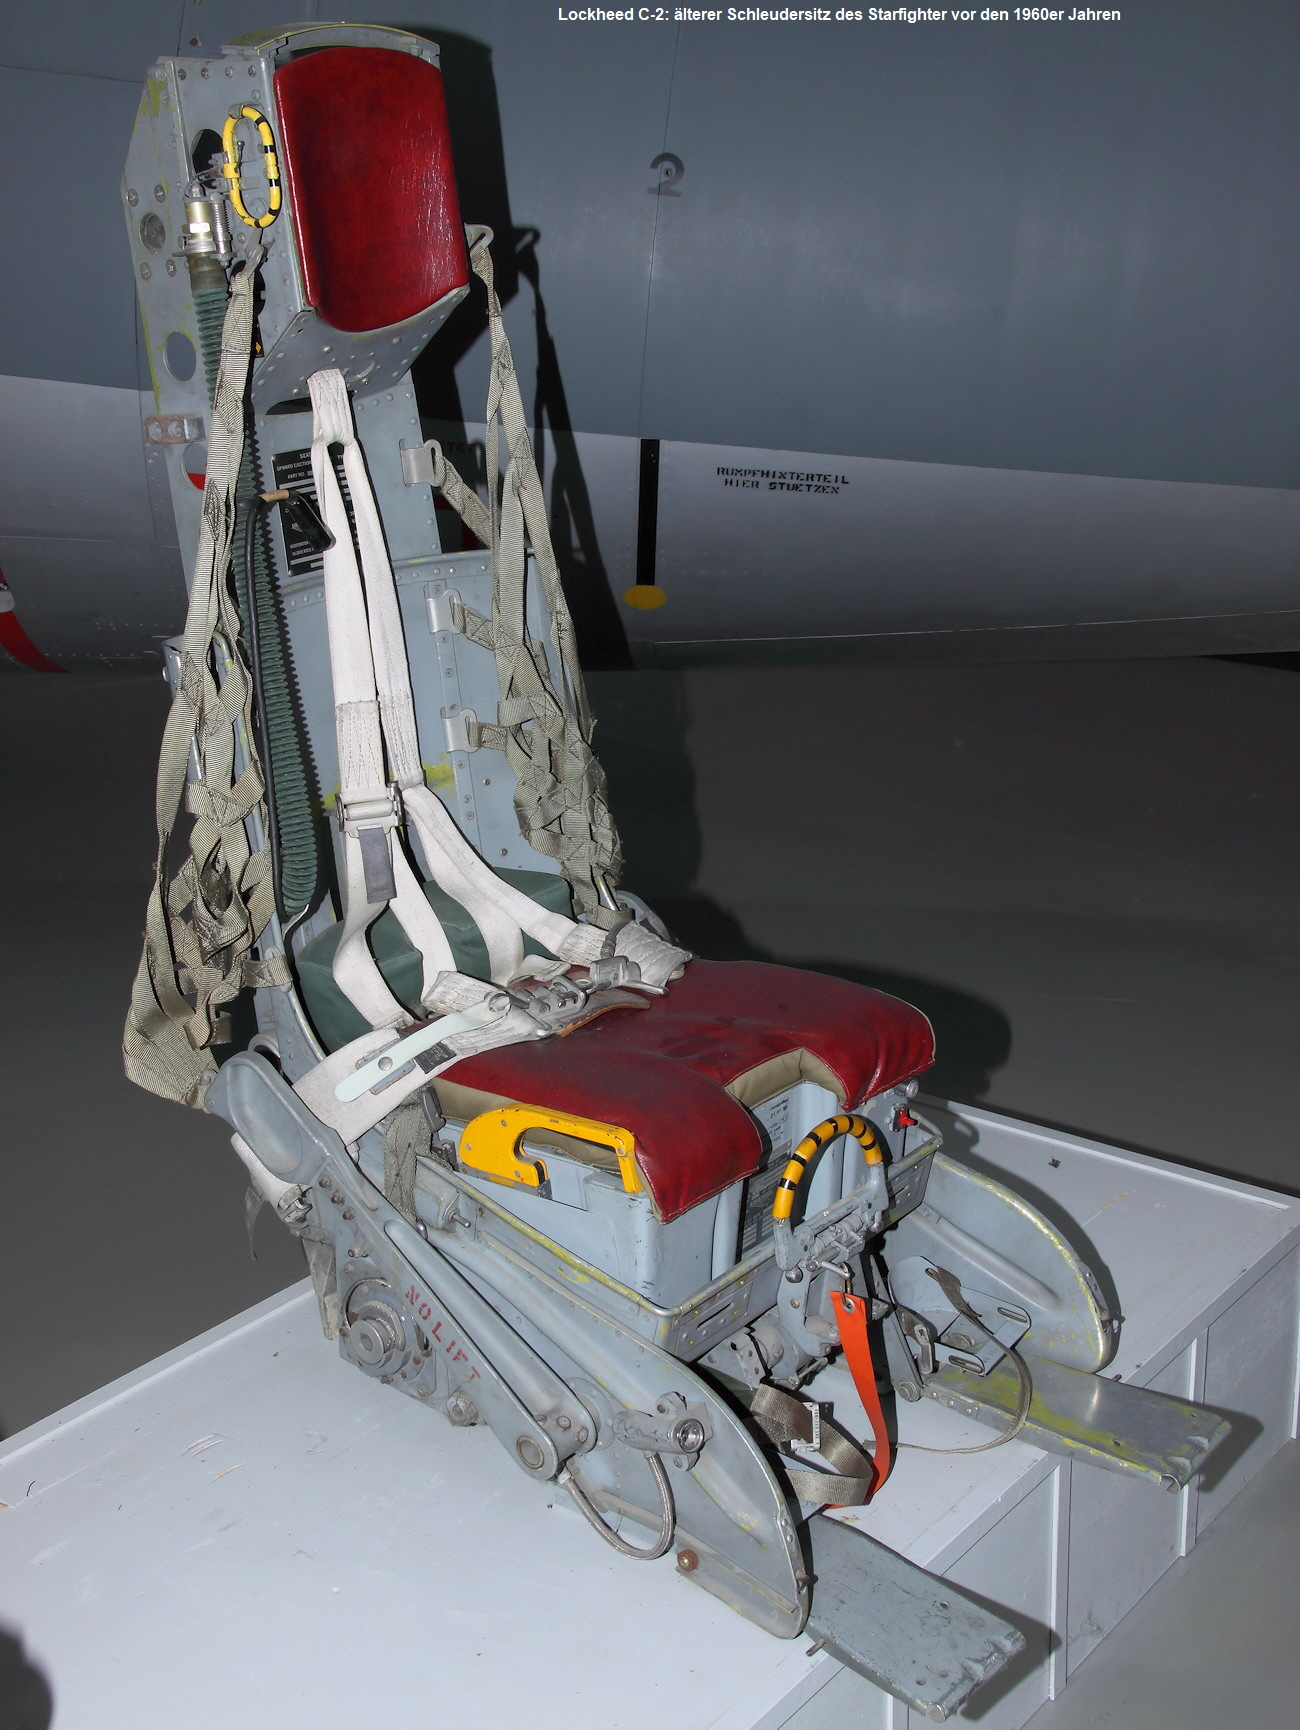 Starfighter-Schleudersitz - Lockheed C-2